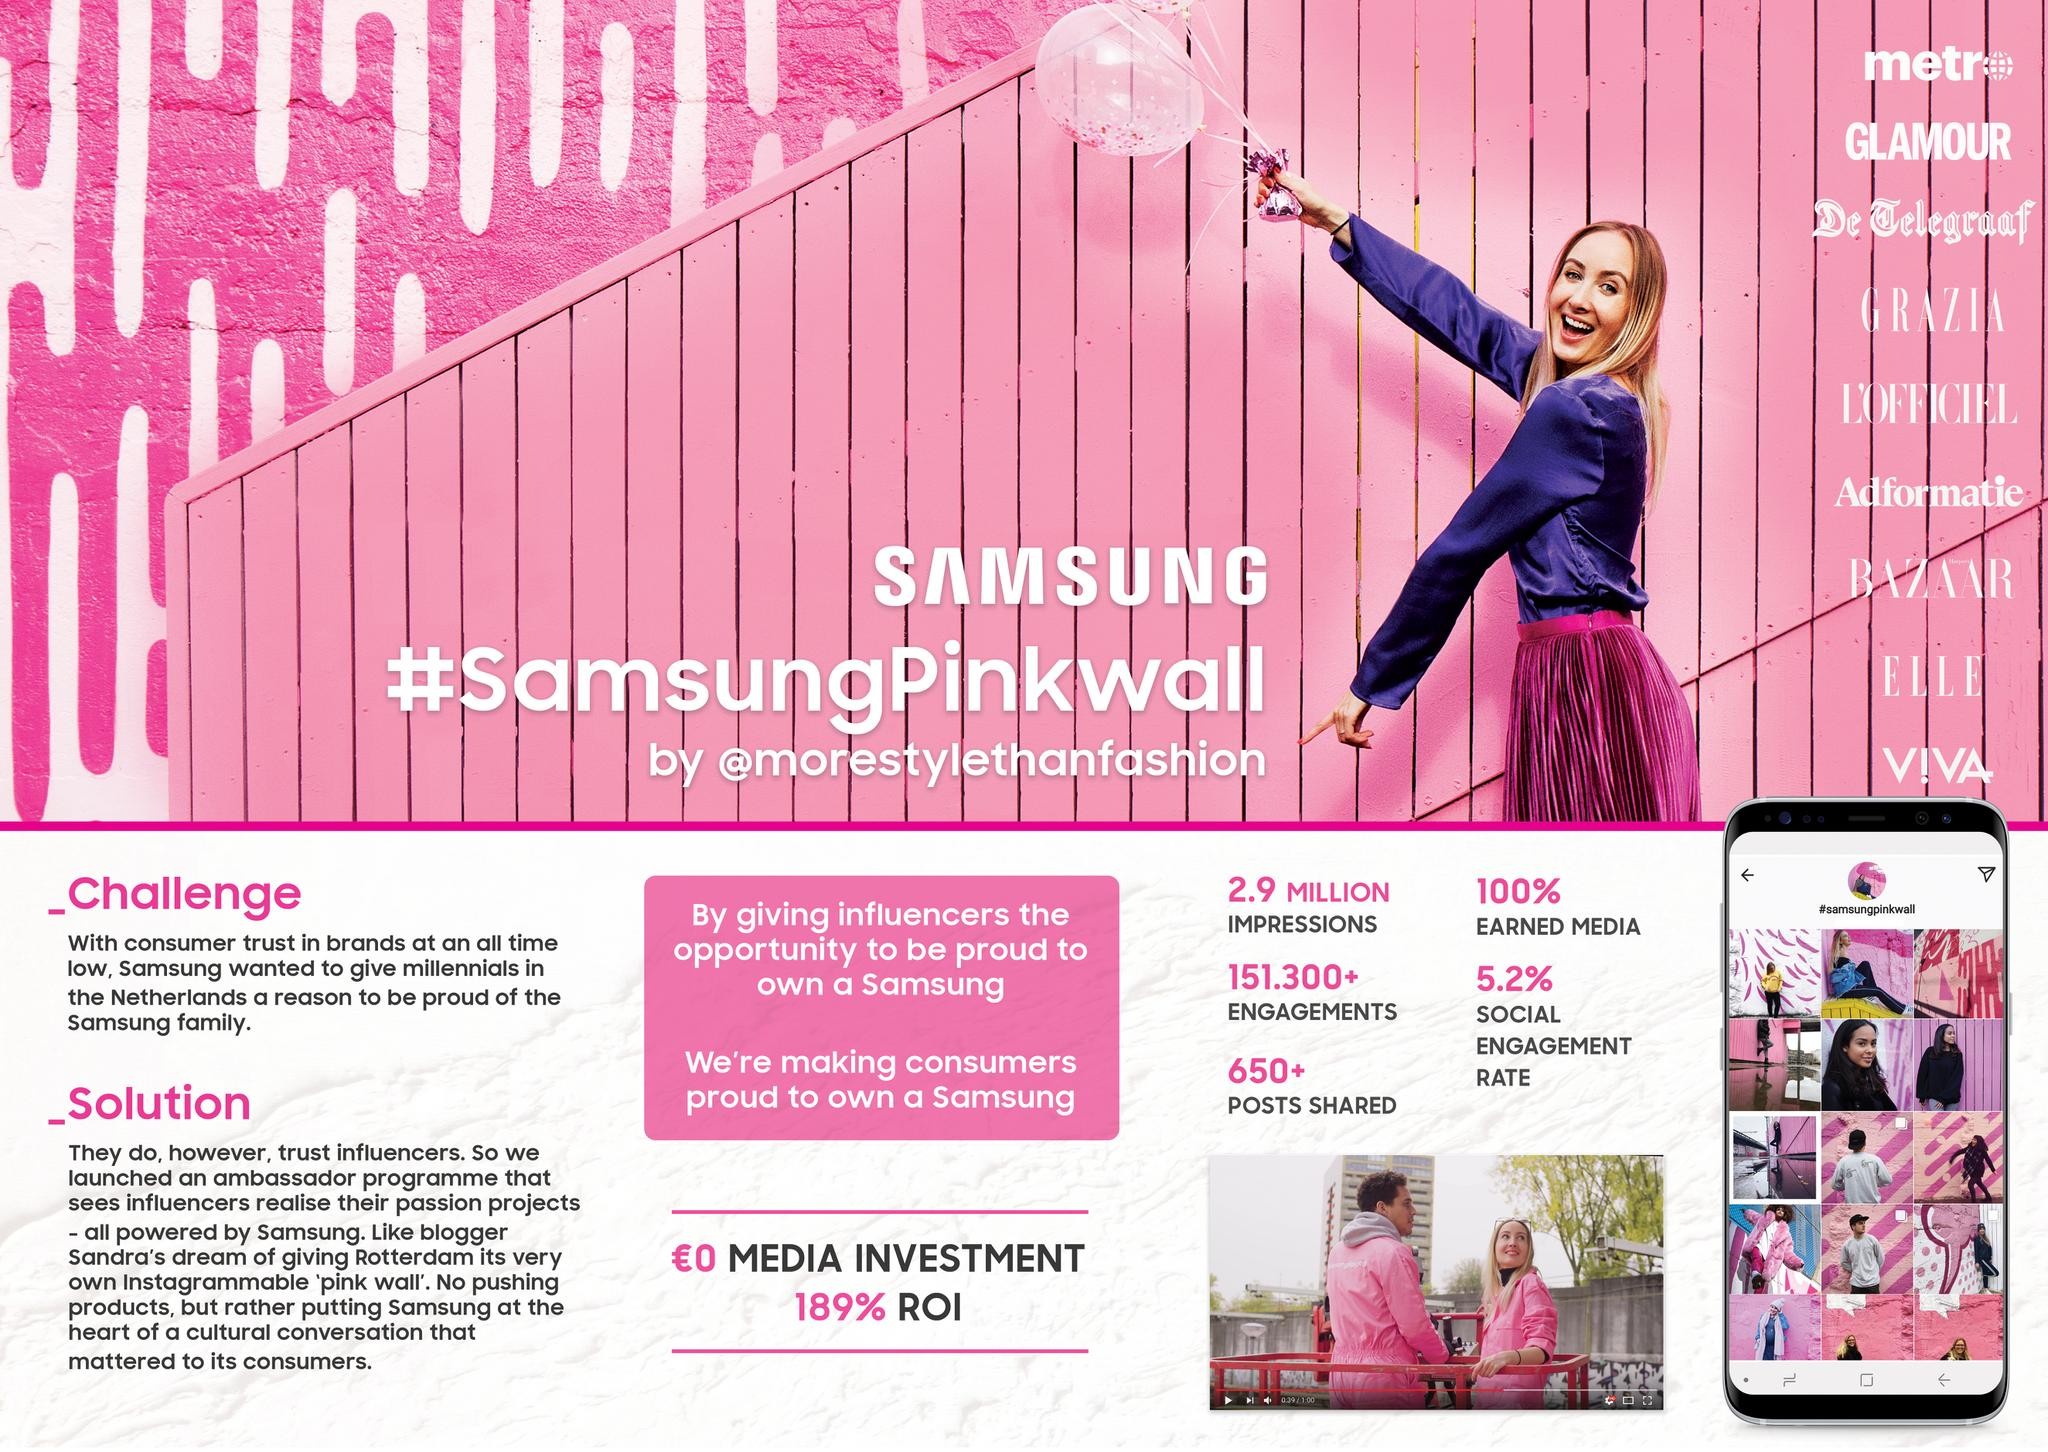 #SamsungPinkwall